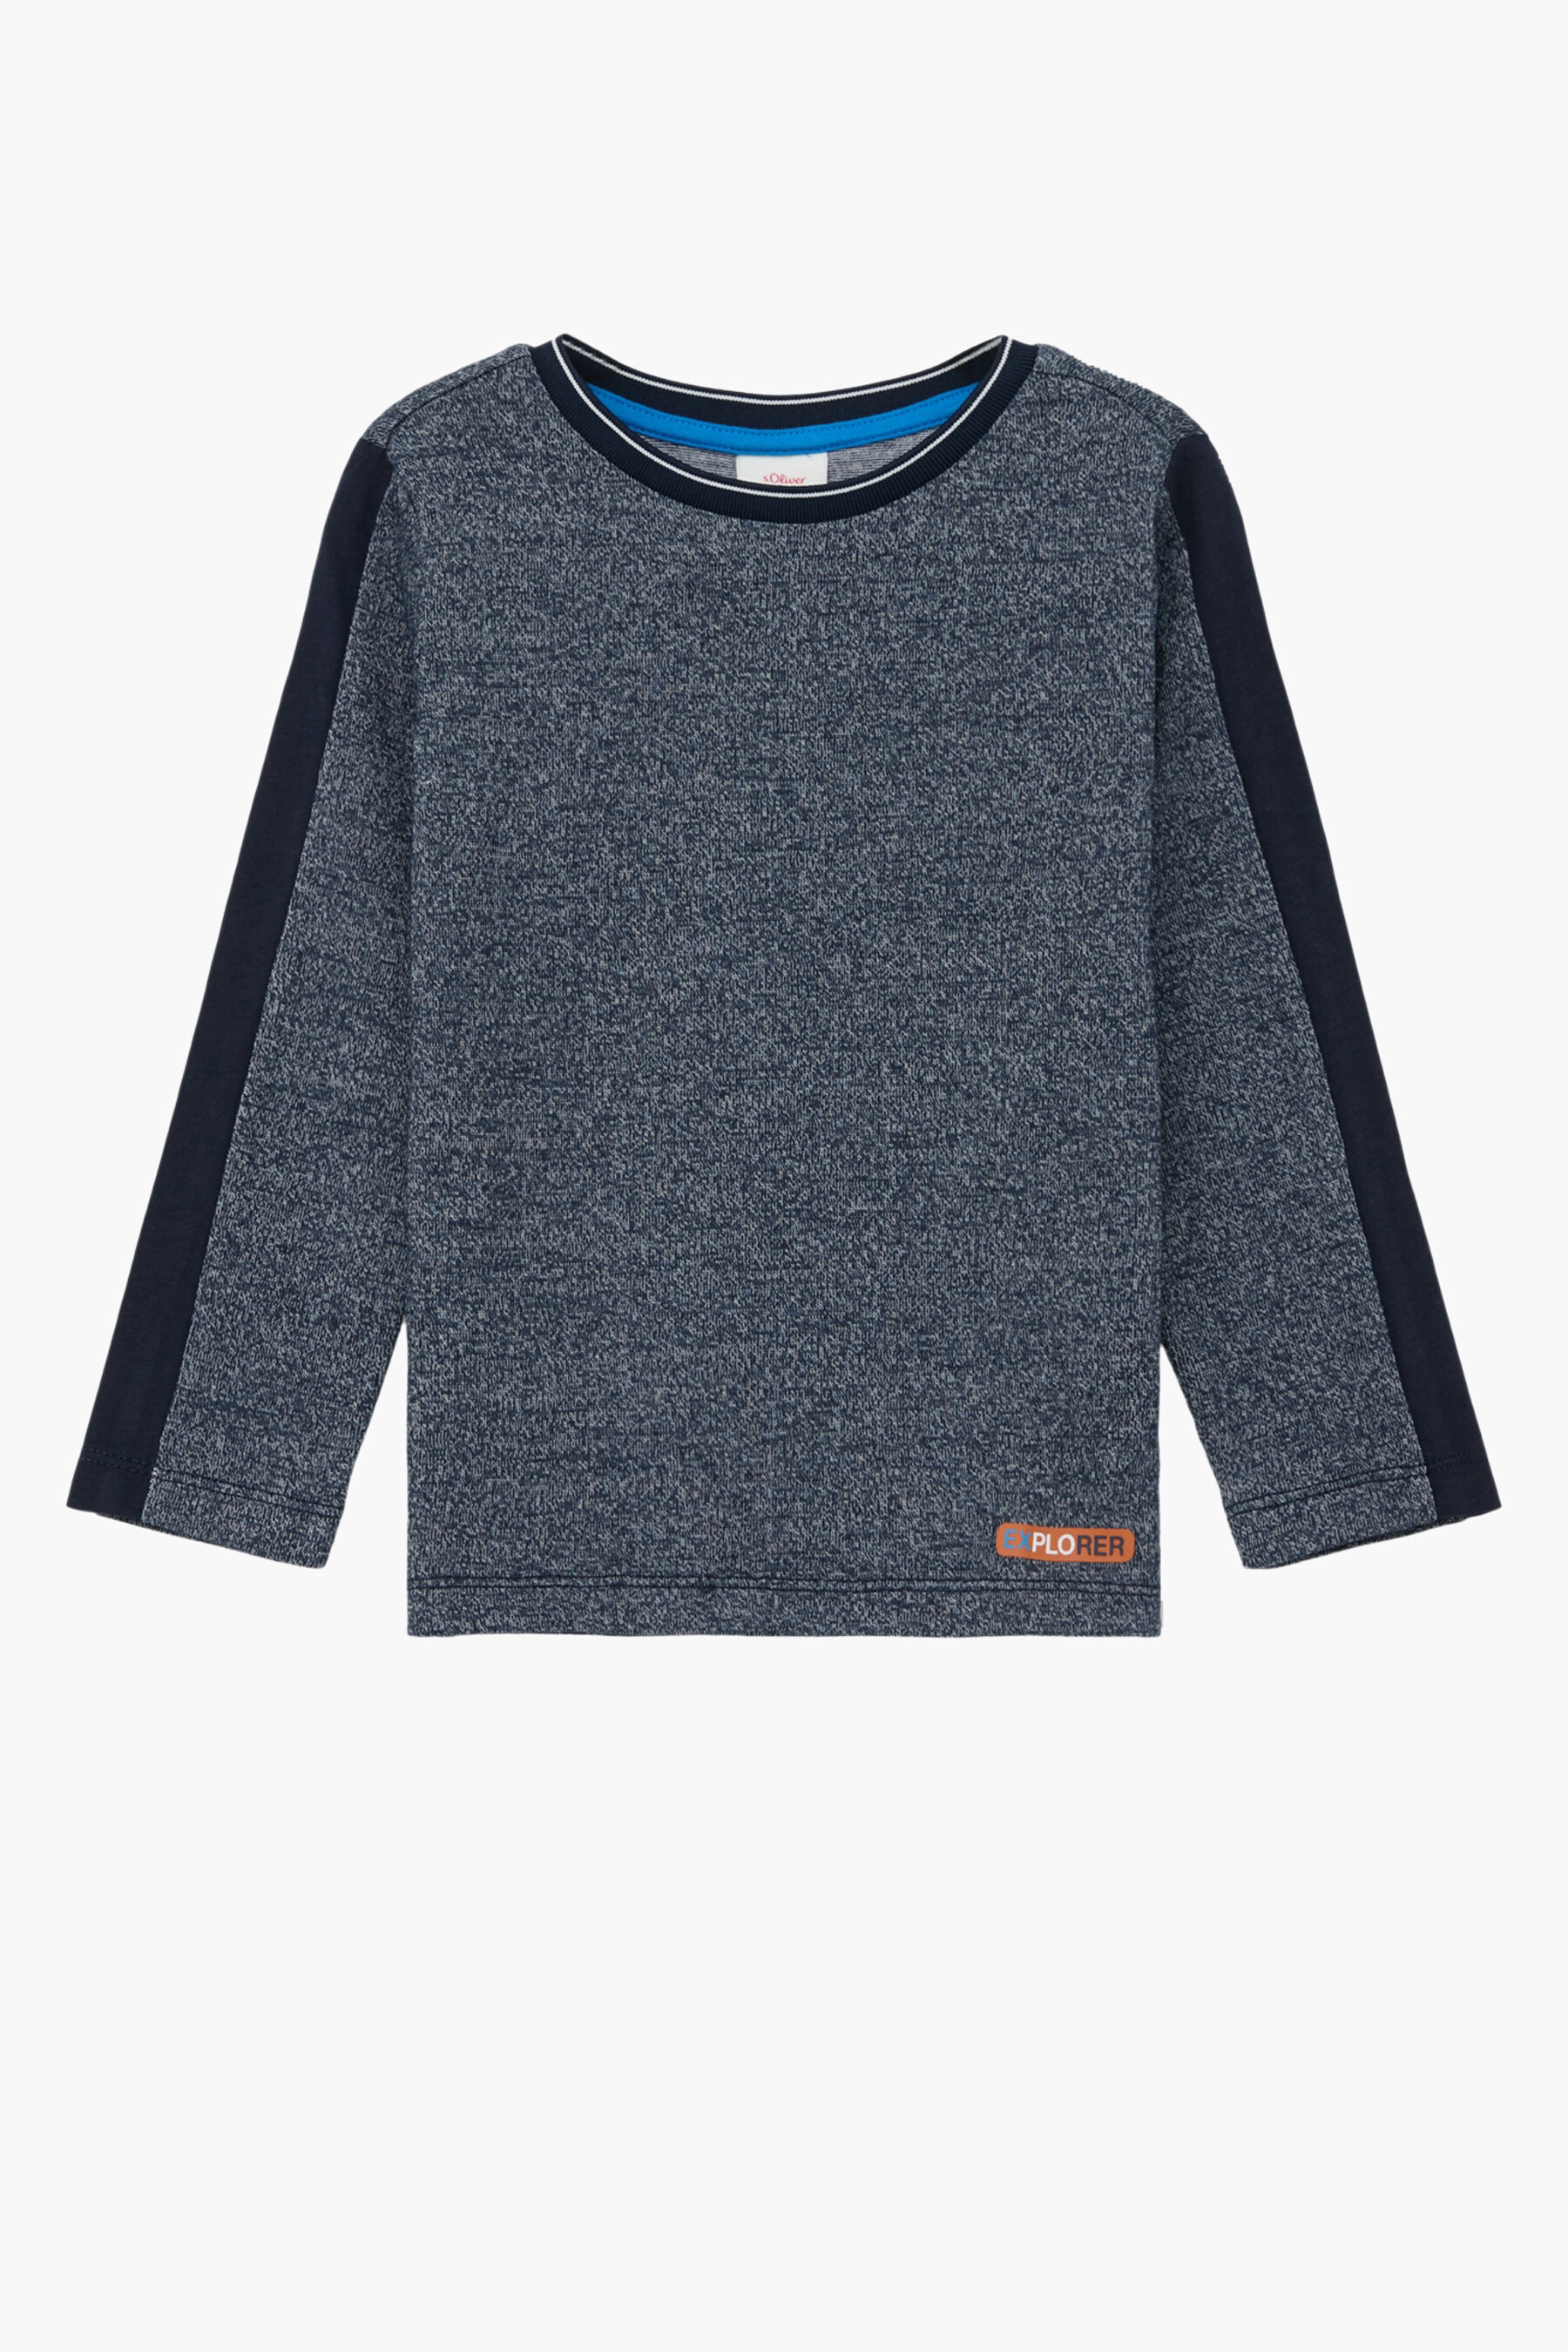 Mode Sweaters Kraagloze sweaters s.Oliver Kraagloze sweater blauw-wit volledige print casual uitstraling 